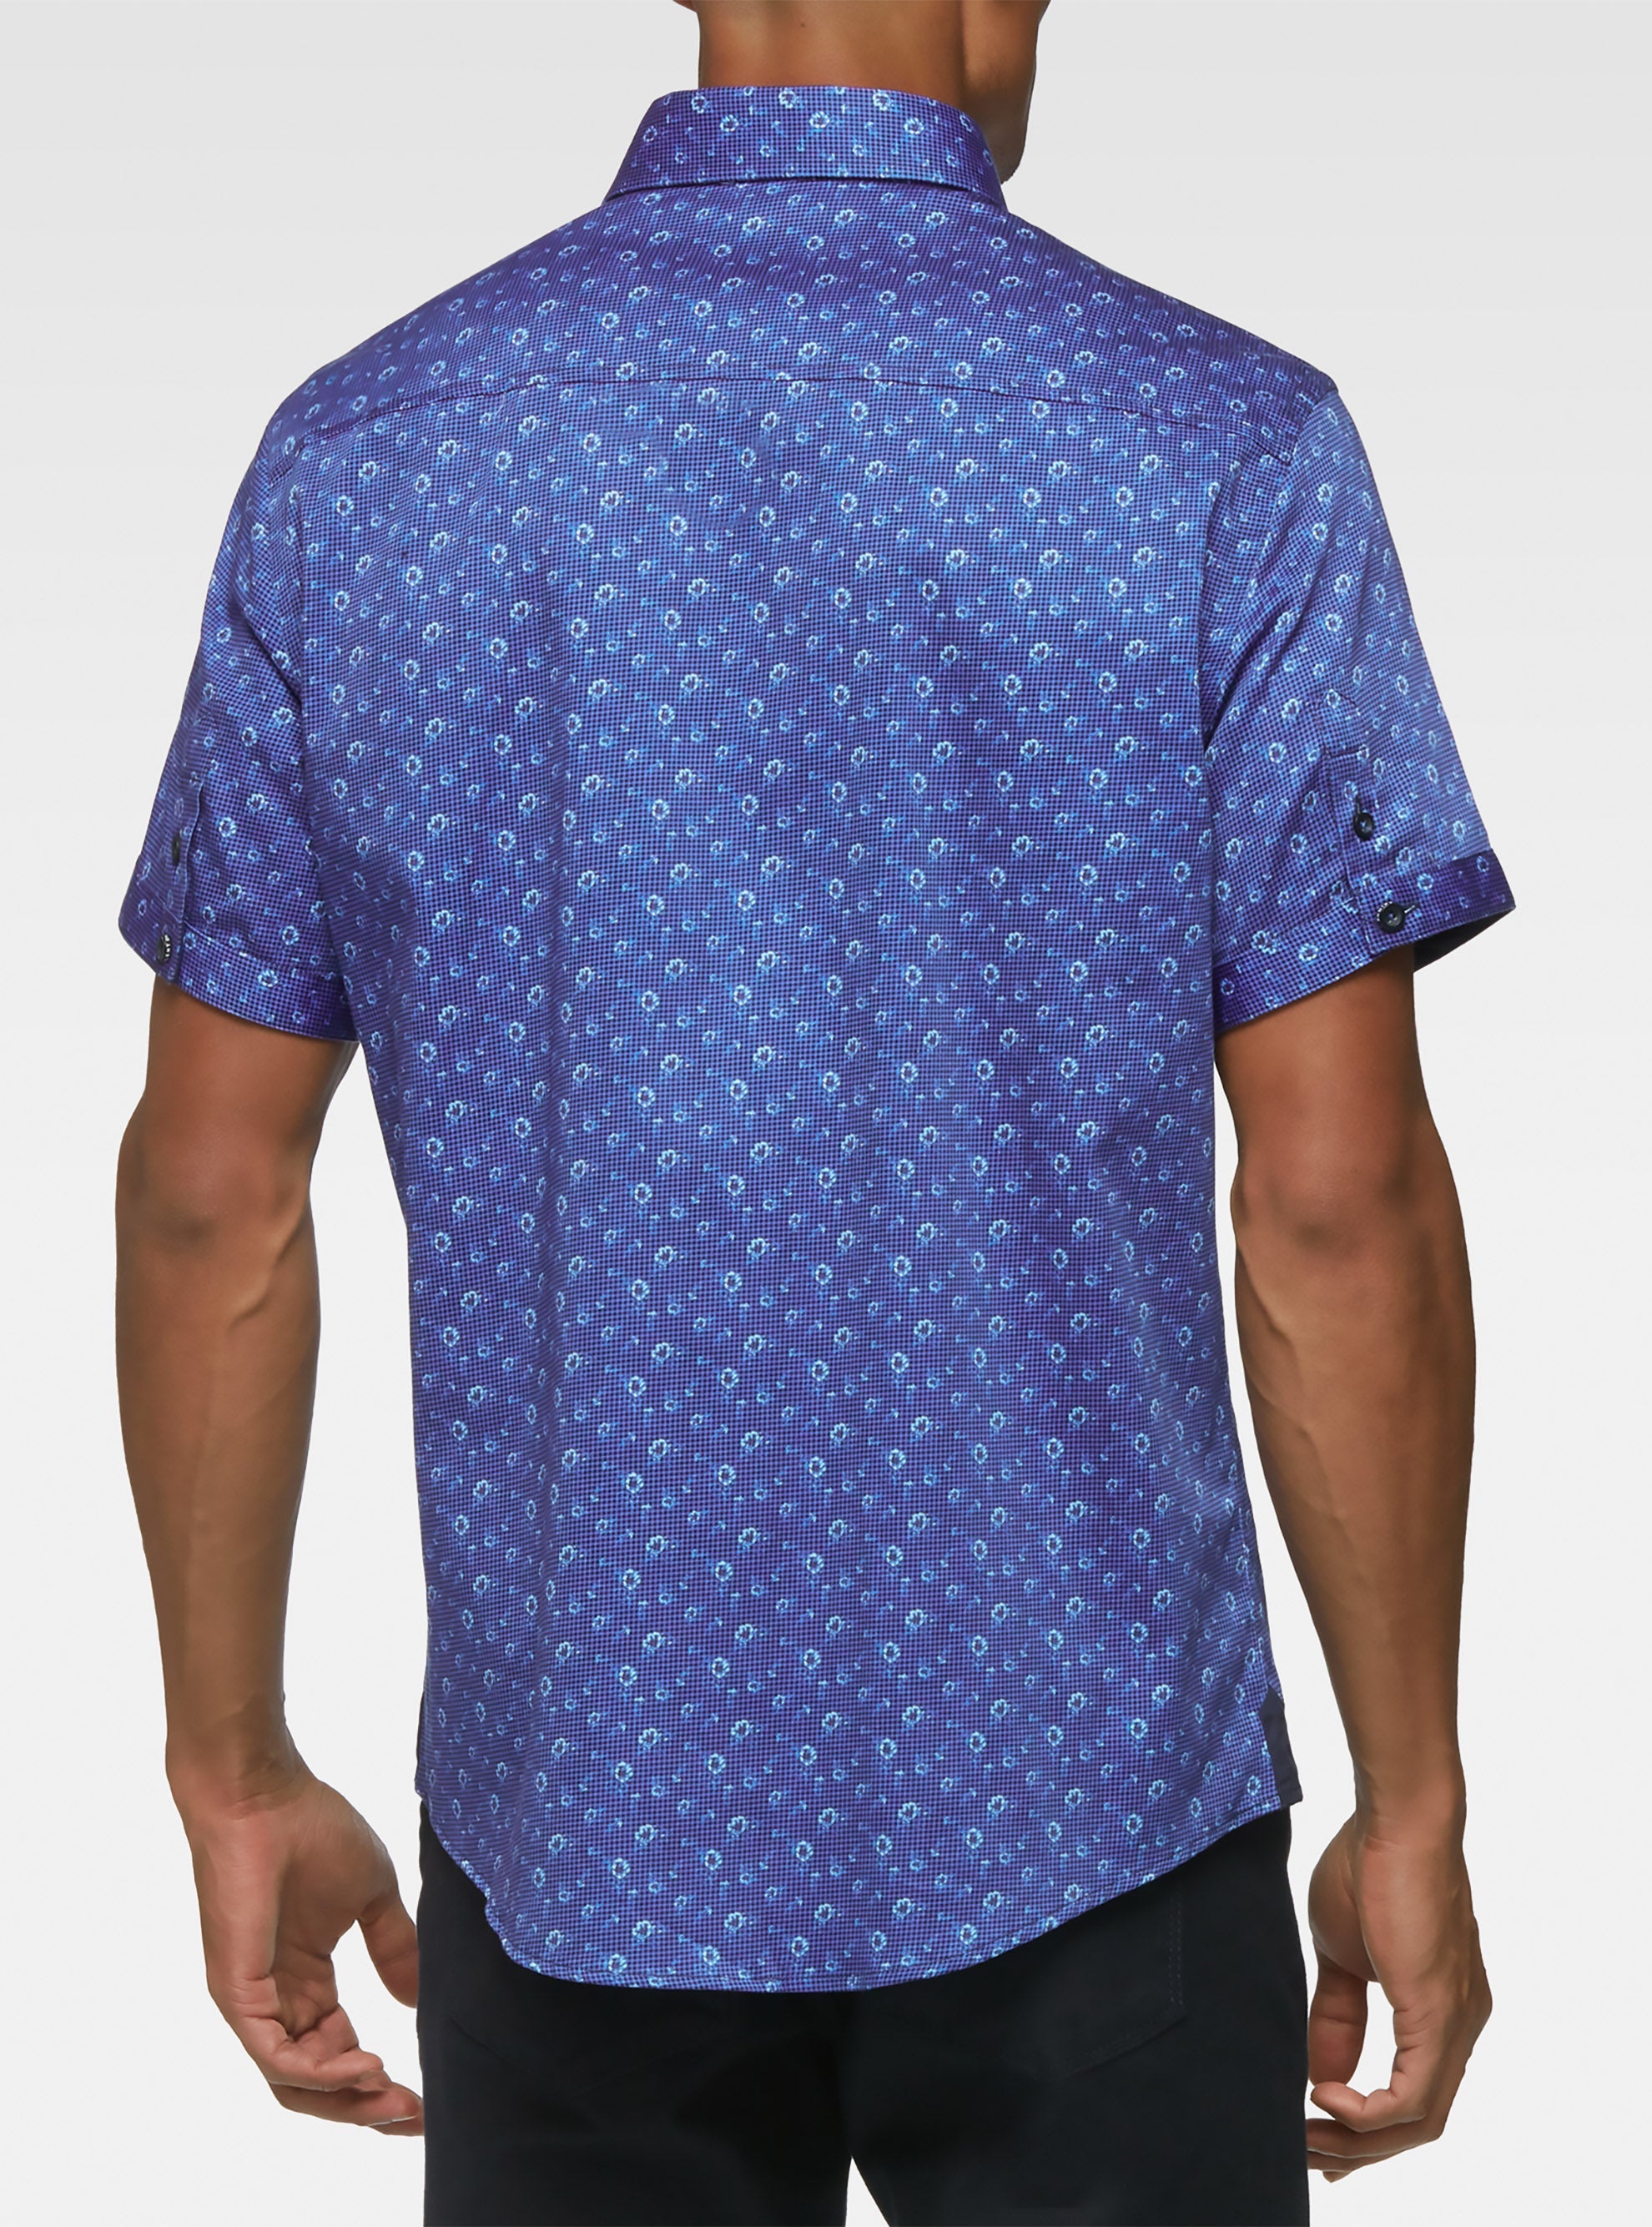 Gingham floral print shirt